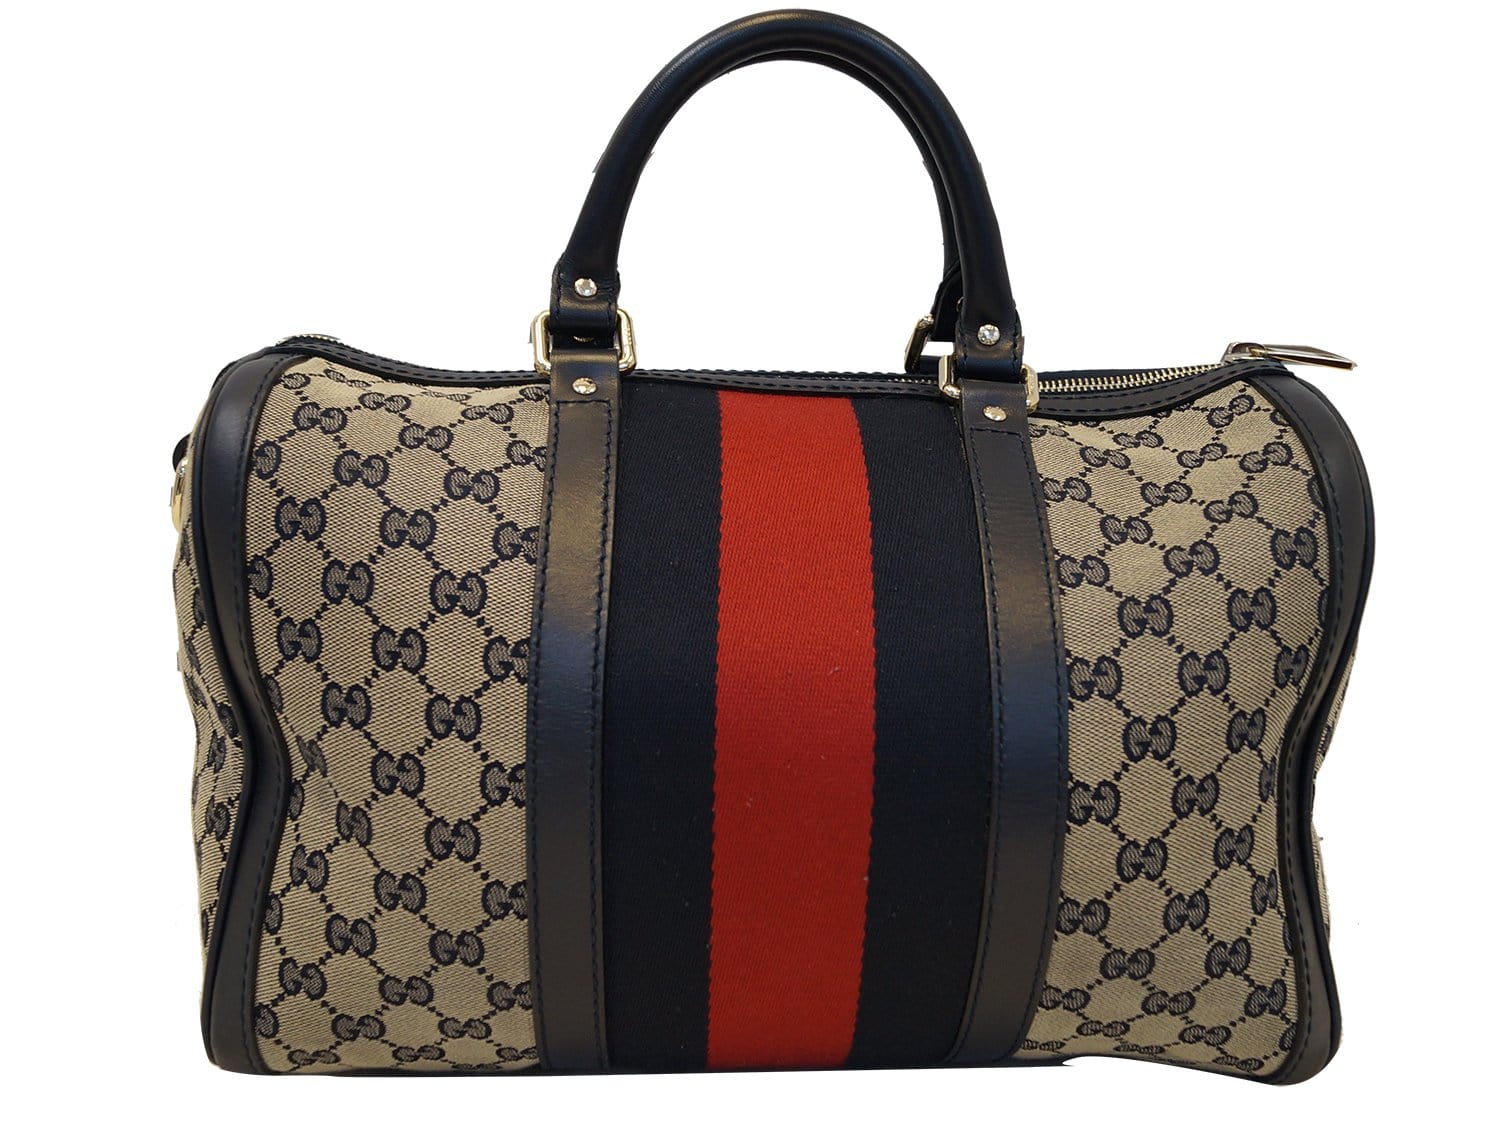 1940's Gucci Bag Gucci handbag [Digital image]. (n.d.). Retrieved from